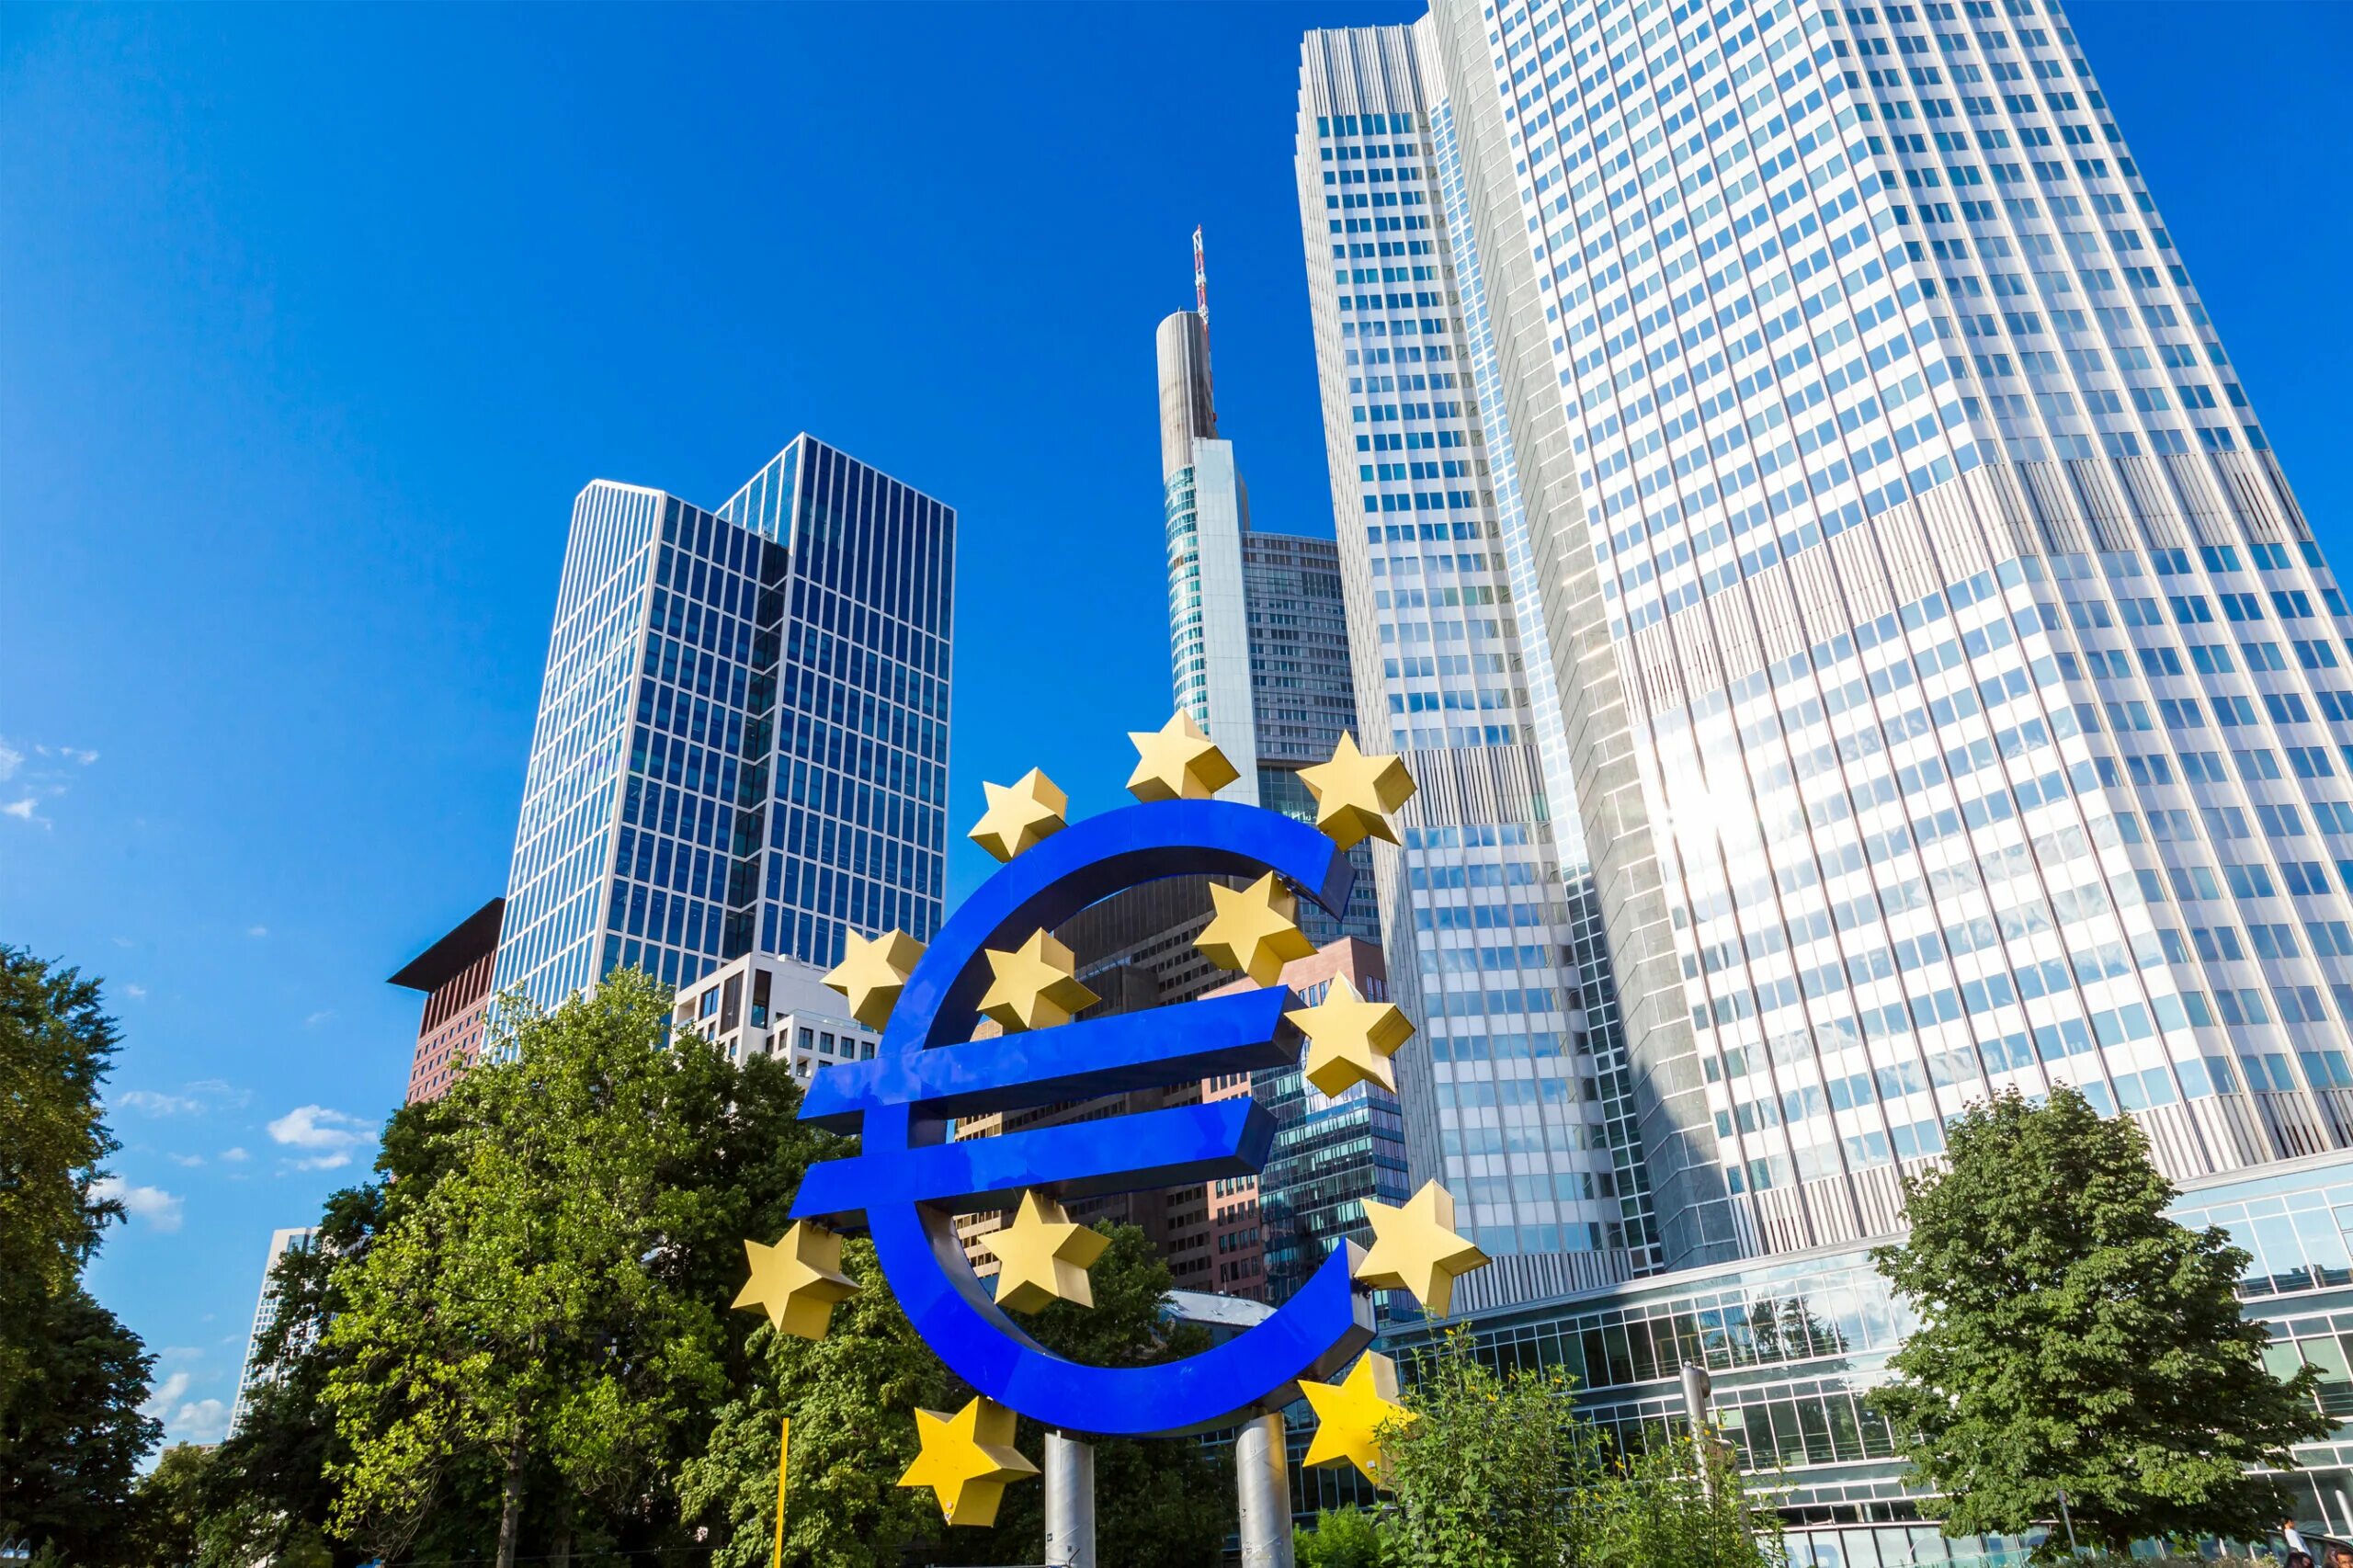 European Central Bank Франкфурт. Европейский Центральный банк (ЕЦБ). Европейский Центральный банк штаб квартира. Штаб Евросоюза Франкфурт. European central bank